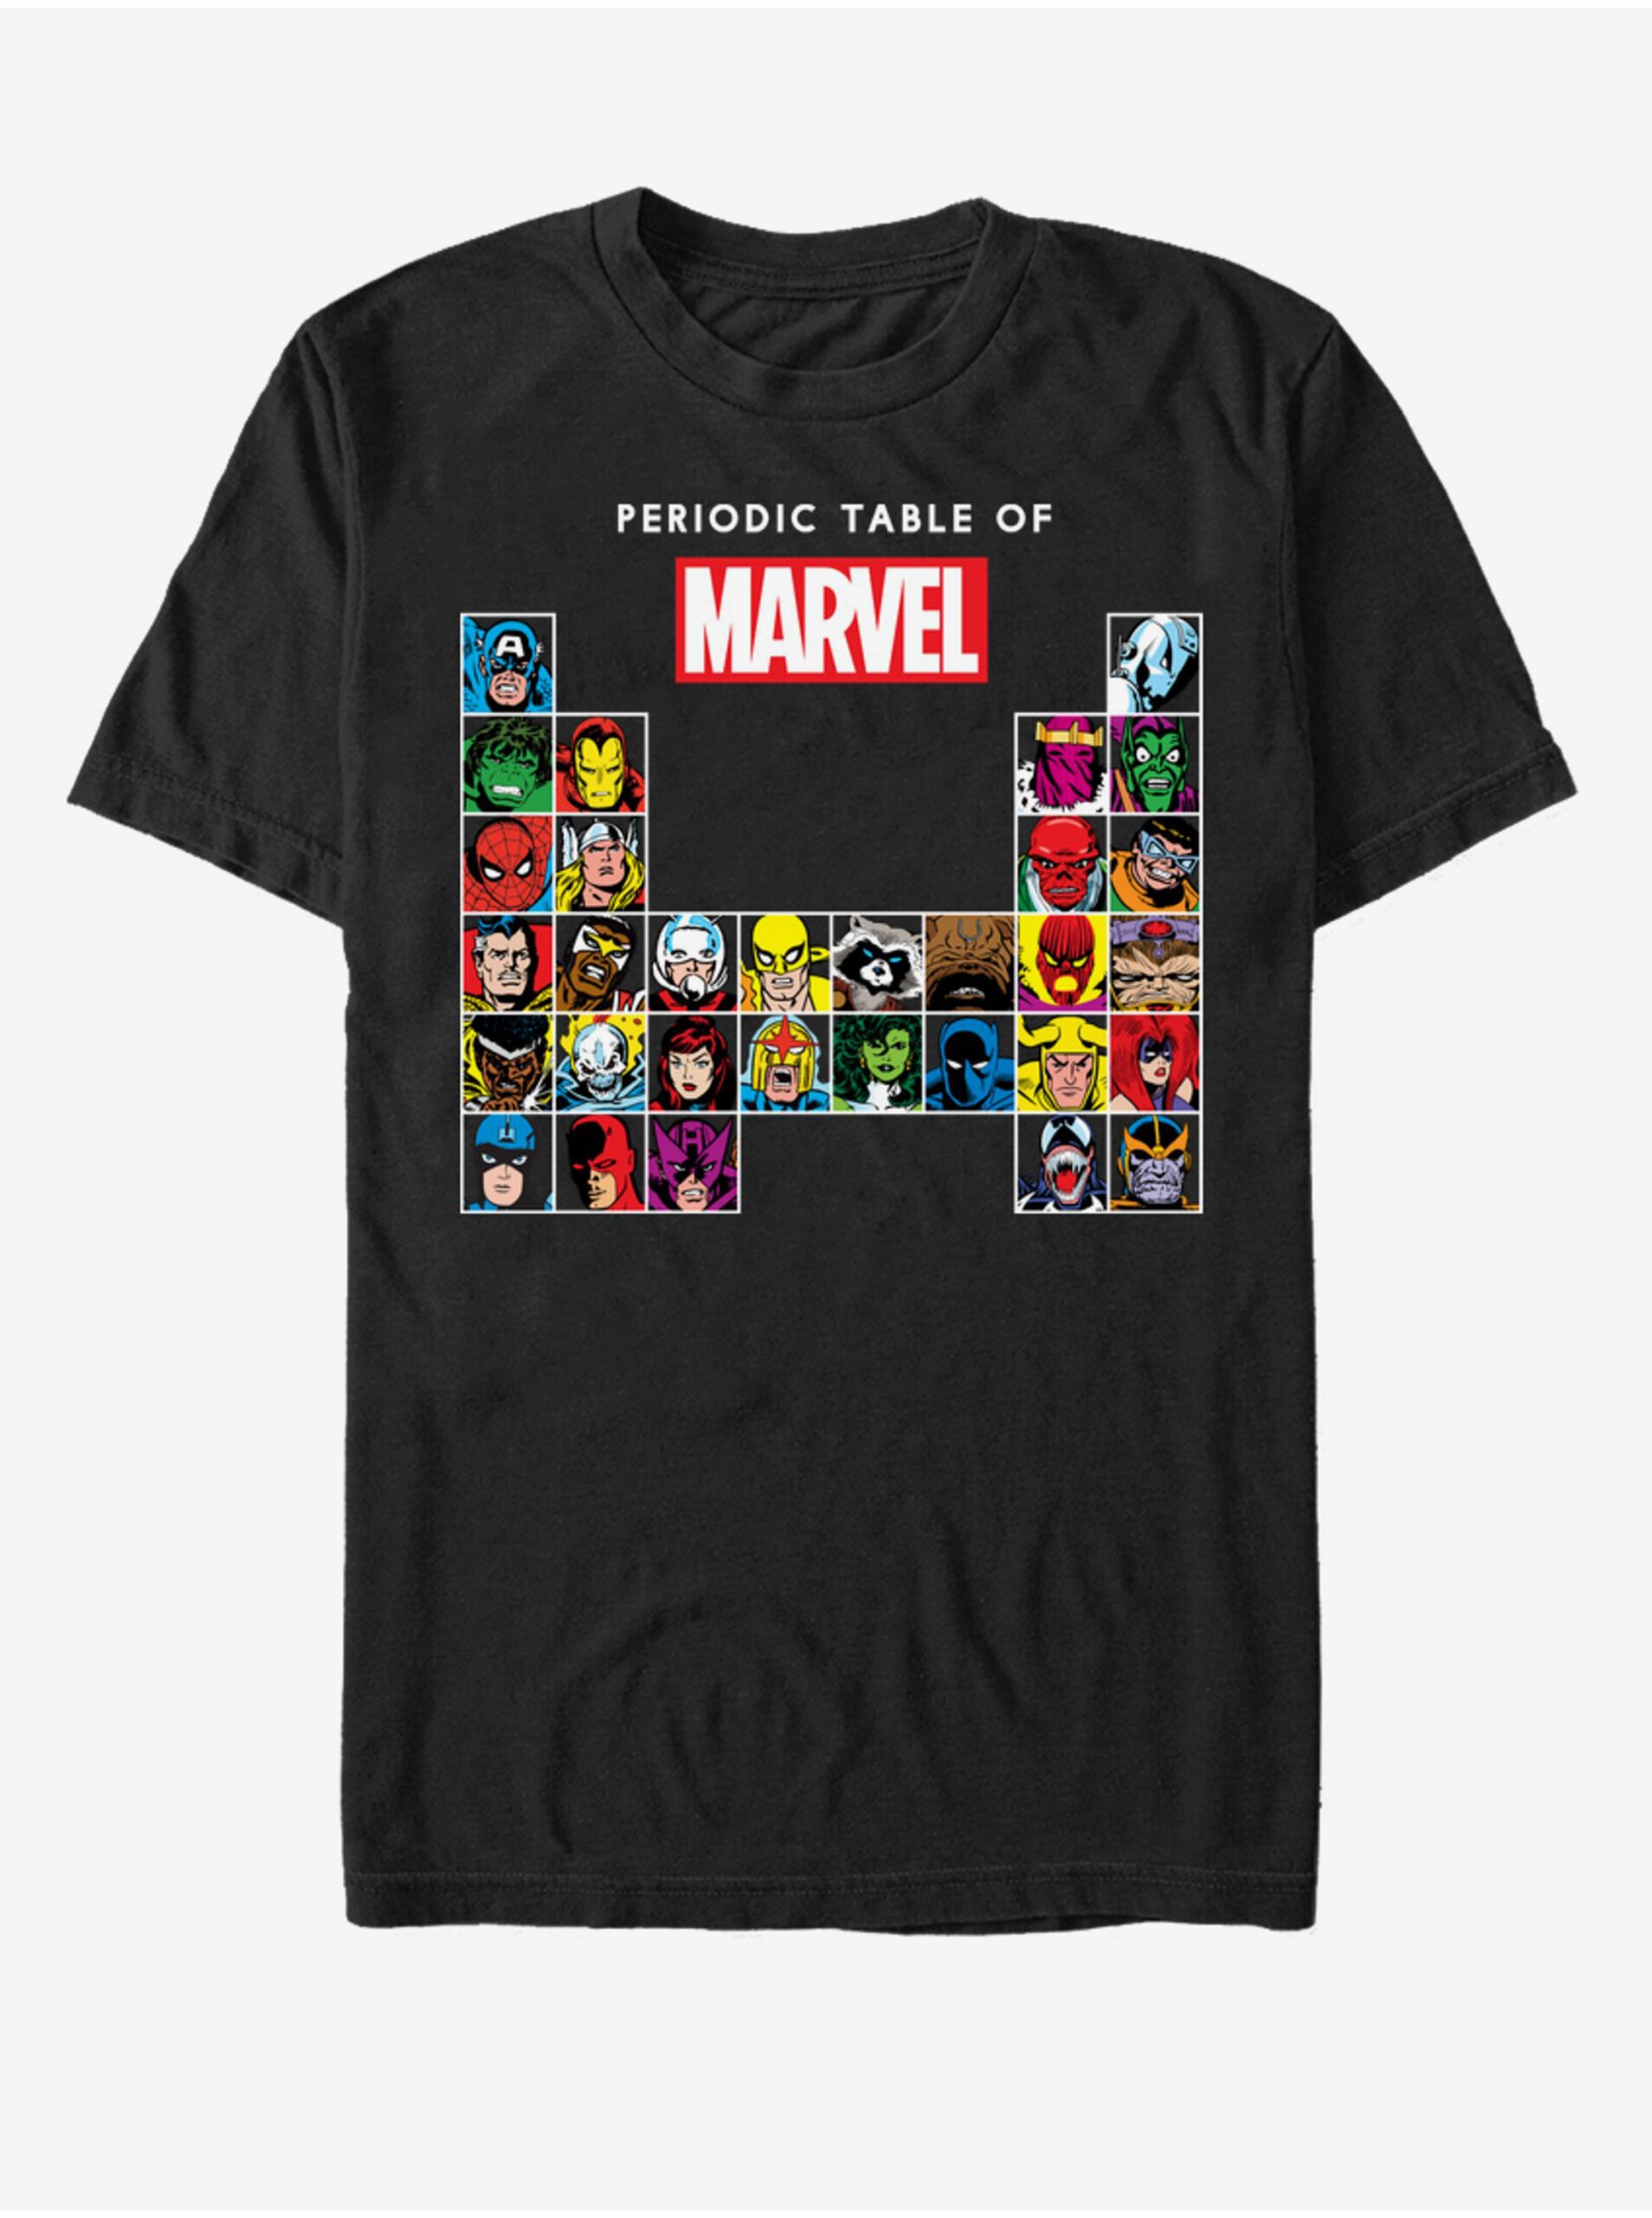 Lacno Čierne unisex tričko ZOOT.Fan Marvel Periodic Marvel